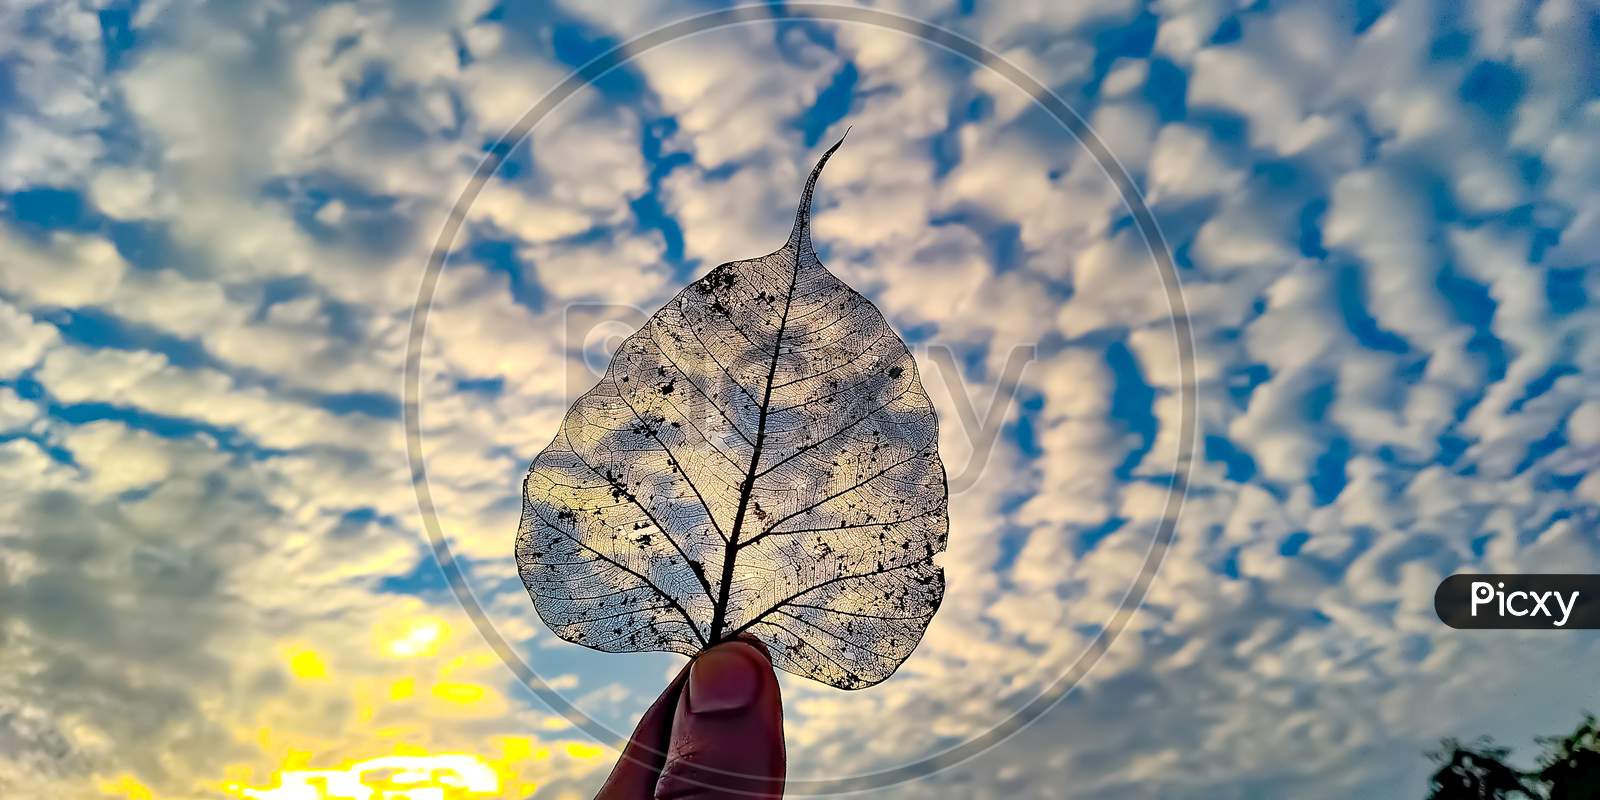 Heart Shape Dry Peepal leaf with sunset background and sunshine and blue sky